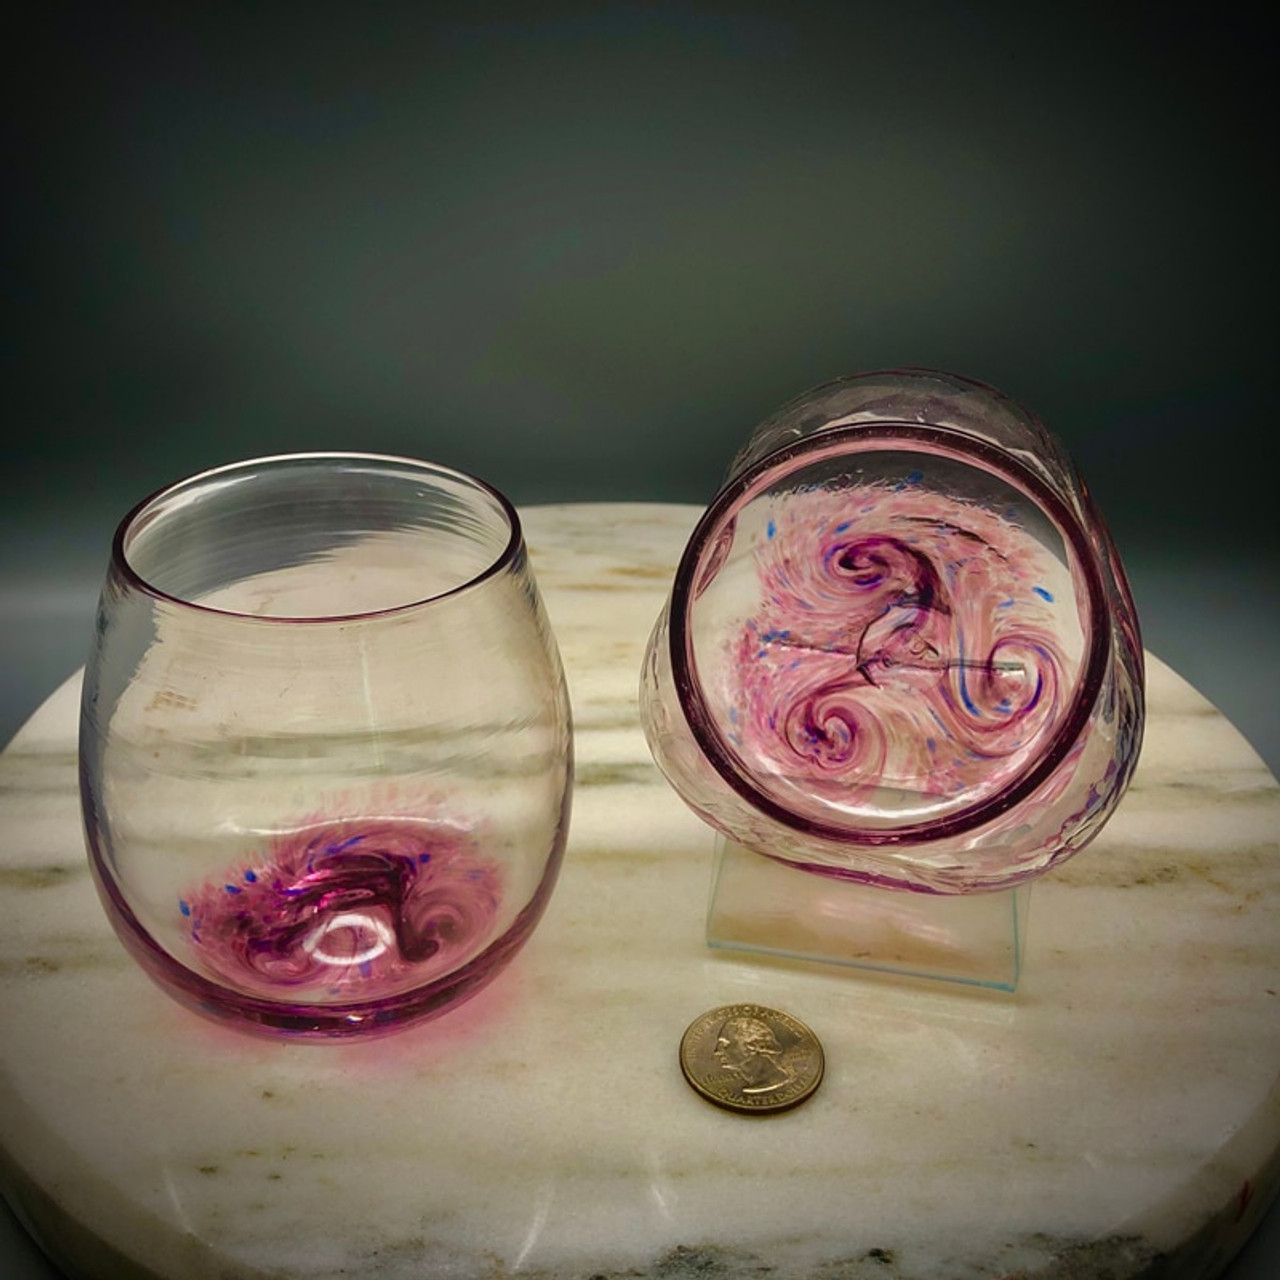 https://cdn11.bigcommerce.com/s-1ogawmc/images/stencil/1280x1280/products/125/539/burgundy-swirl-stemless-wine-glasses-i-bc-web__67387.1598498653.jpg?c=2